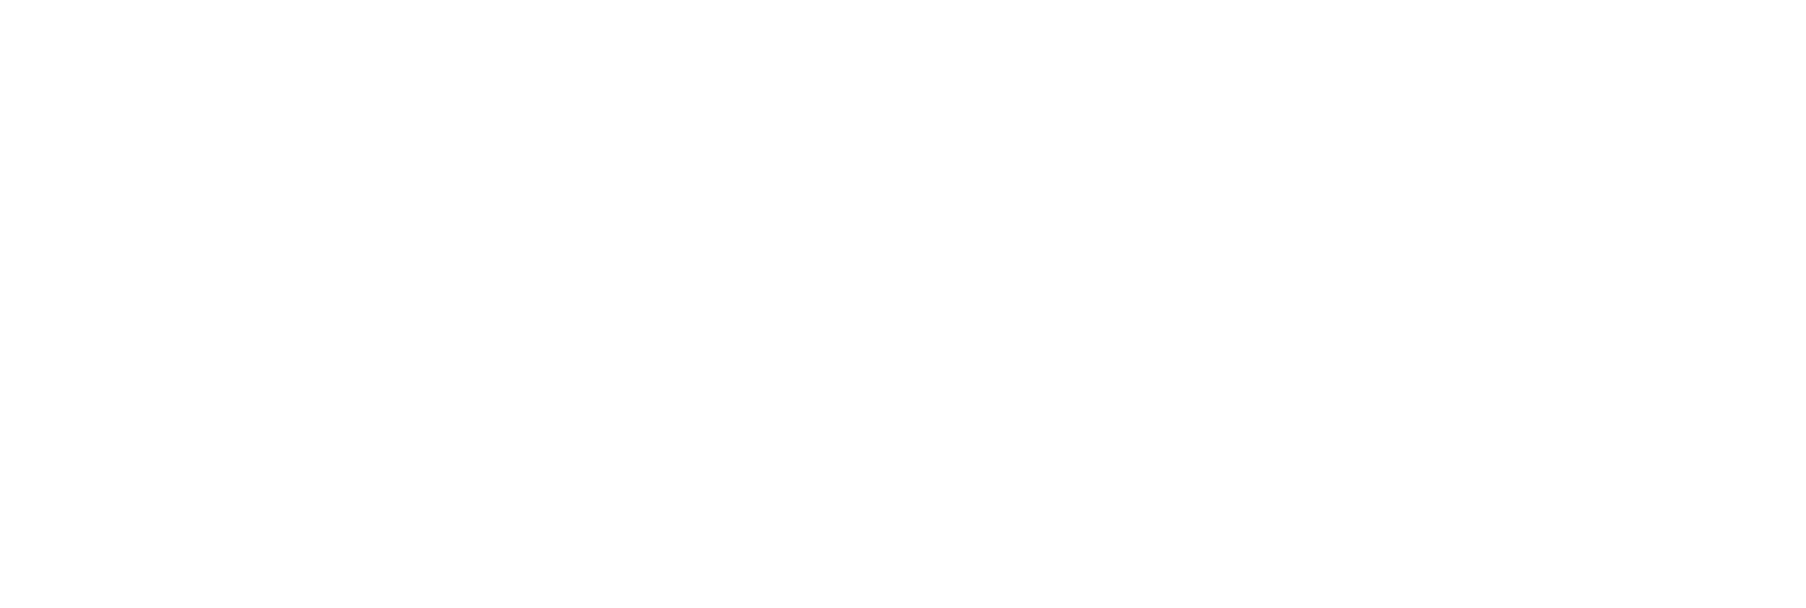 Peoples Health A UnitedHealthcare Company white logo